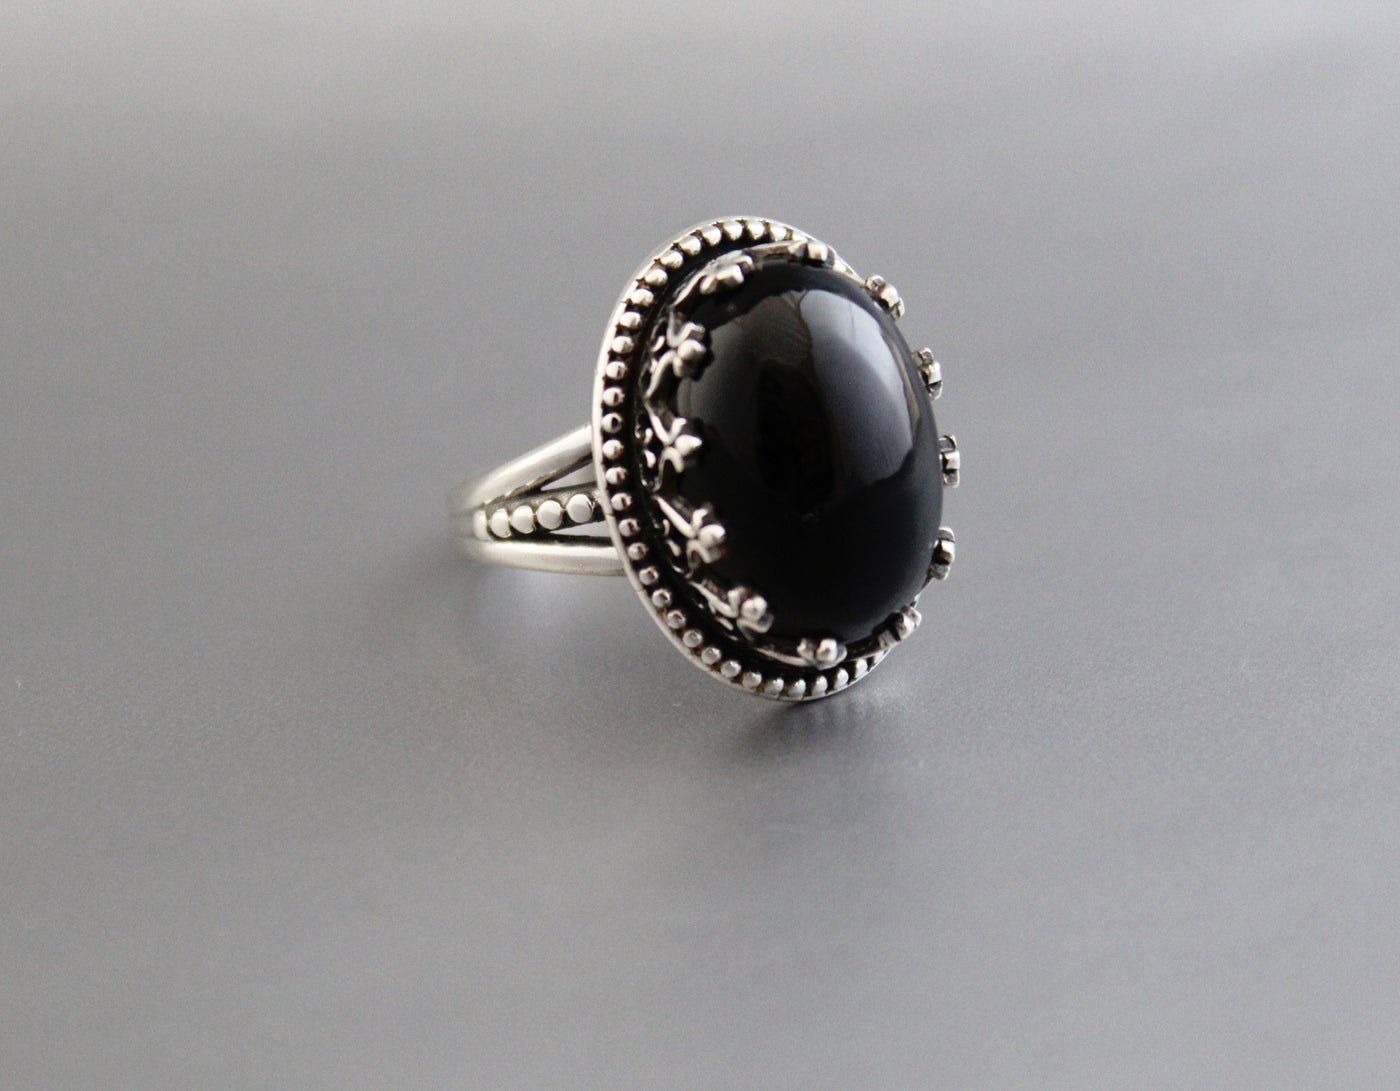 Natural Black Onyx Ring, Rose Gold Ring, 925 Sterling Silver Ring, Designer Ring, Black Onyx Jewelry, Black Diamond Ring, Natural Stone,Boho